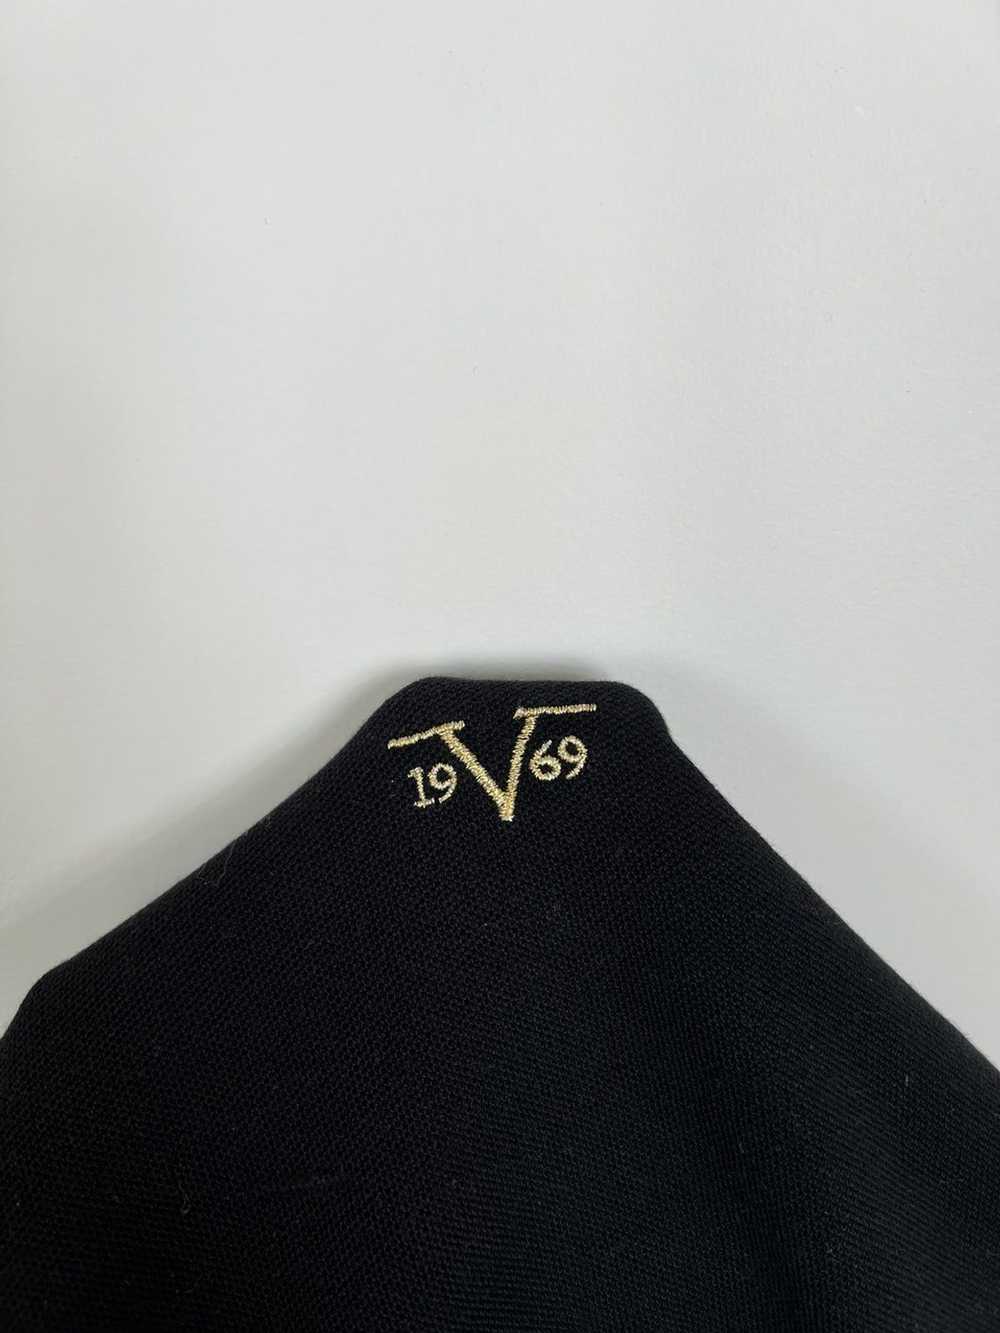 Versace Polo Shirt Versace 19v69 black - image 5